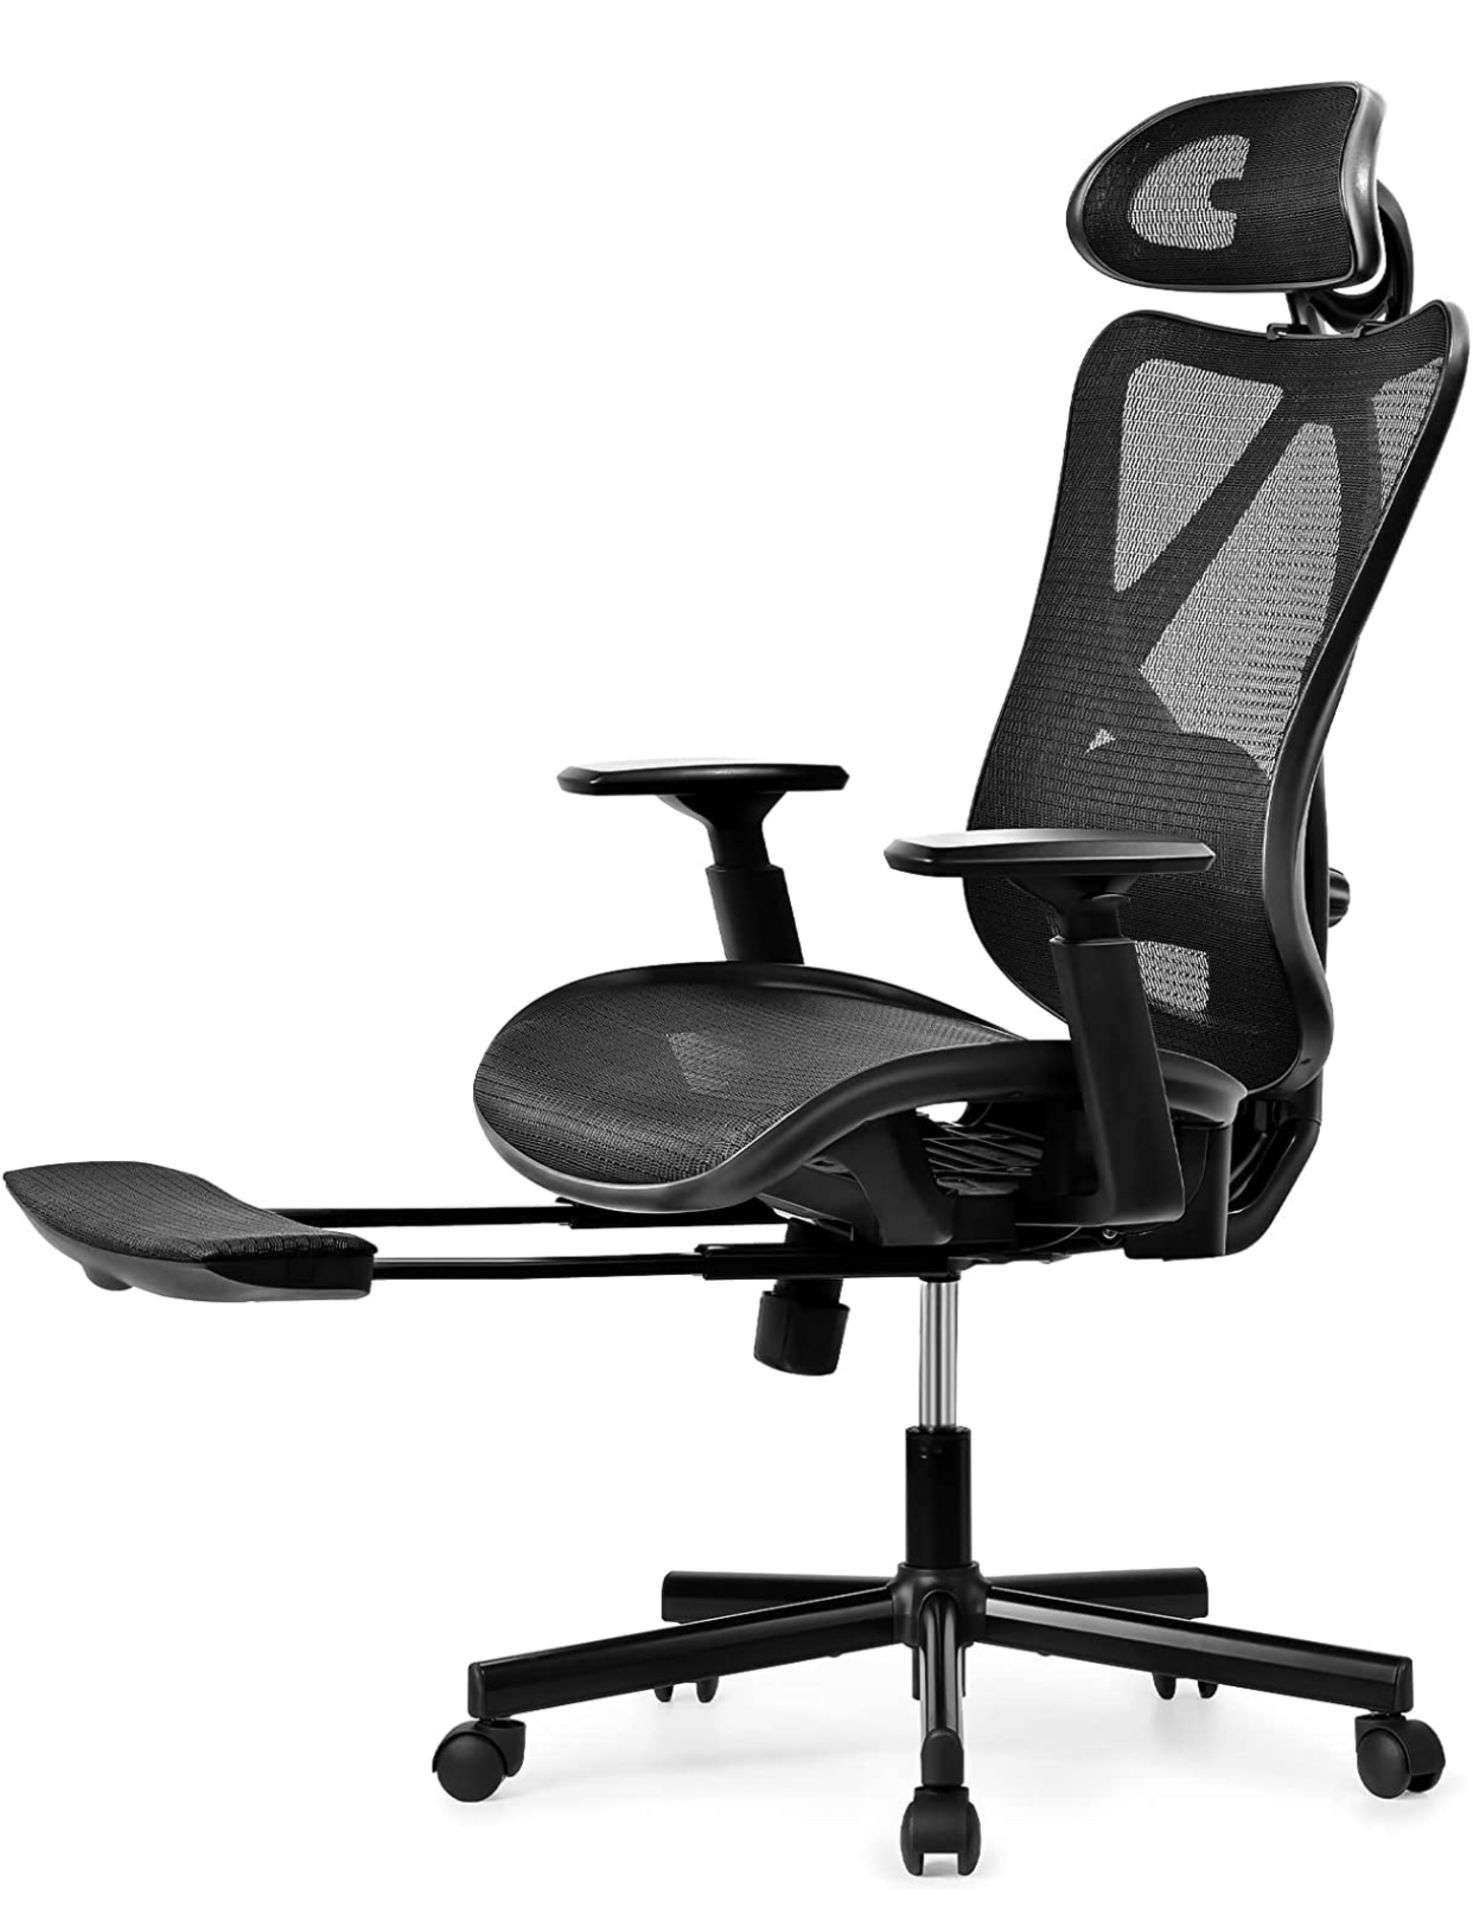 RRP £239.99 BASETBL Ergonomic Office Chair Executive Computer Desk Chair